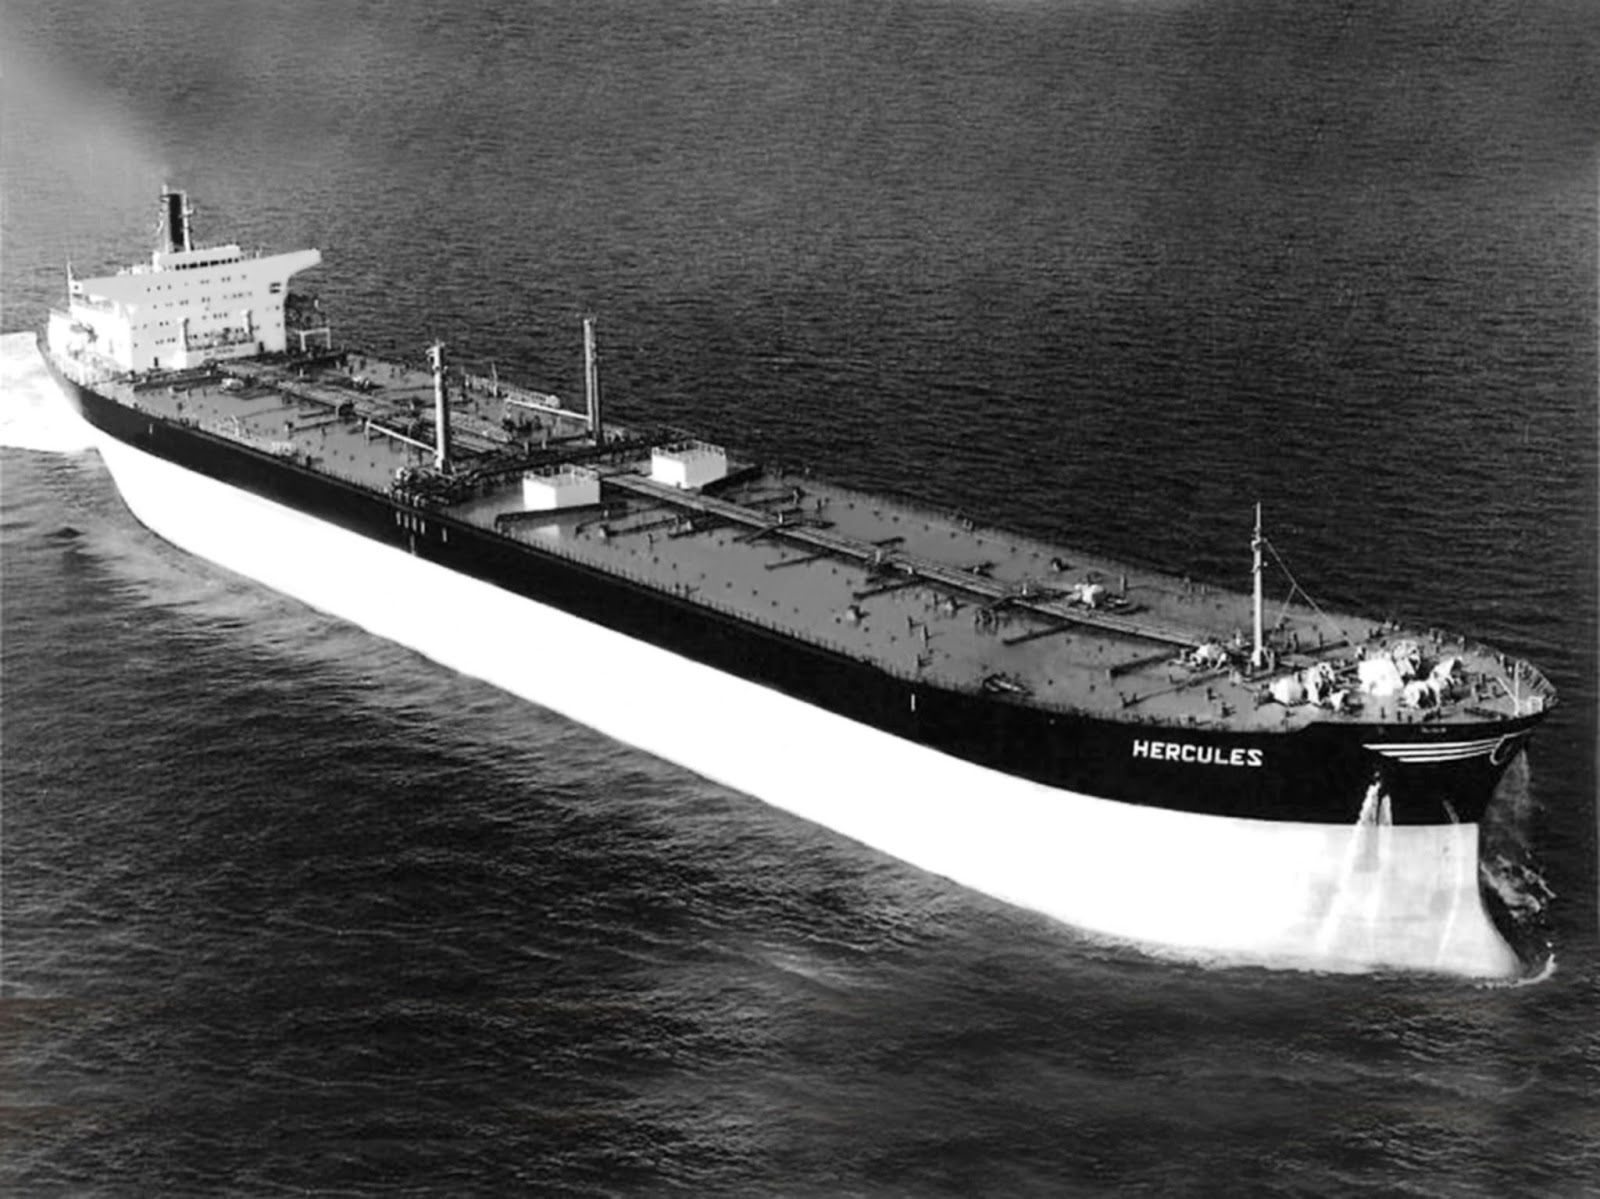 VLCC (Very Large Crude Carrier) “Hércules”